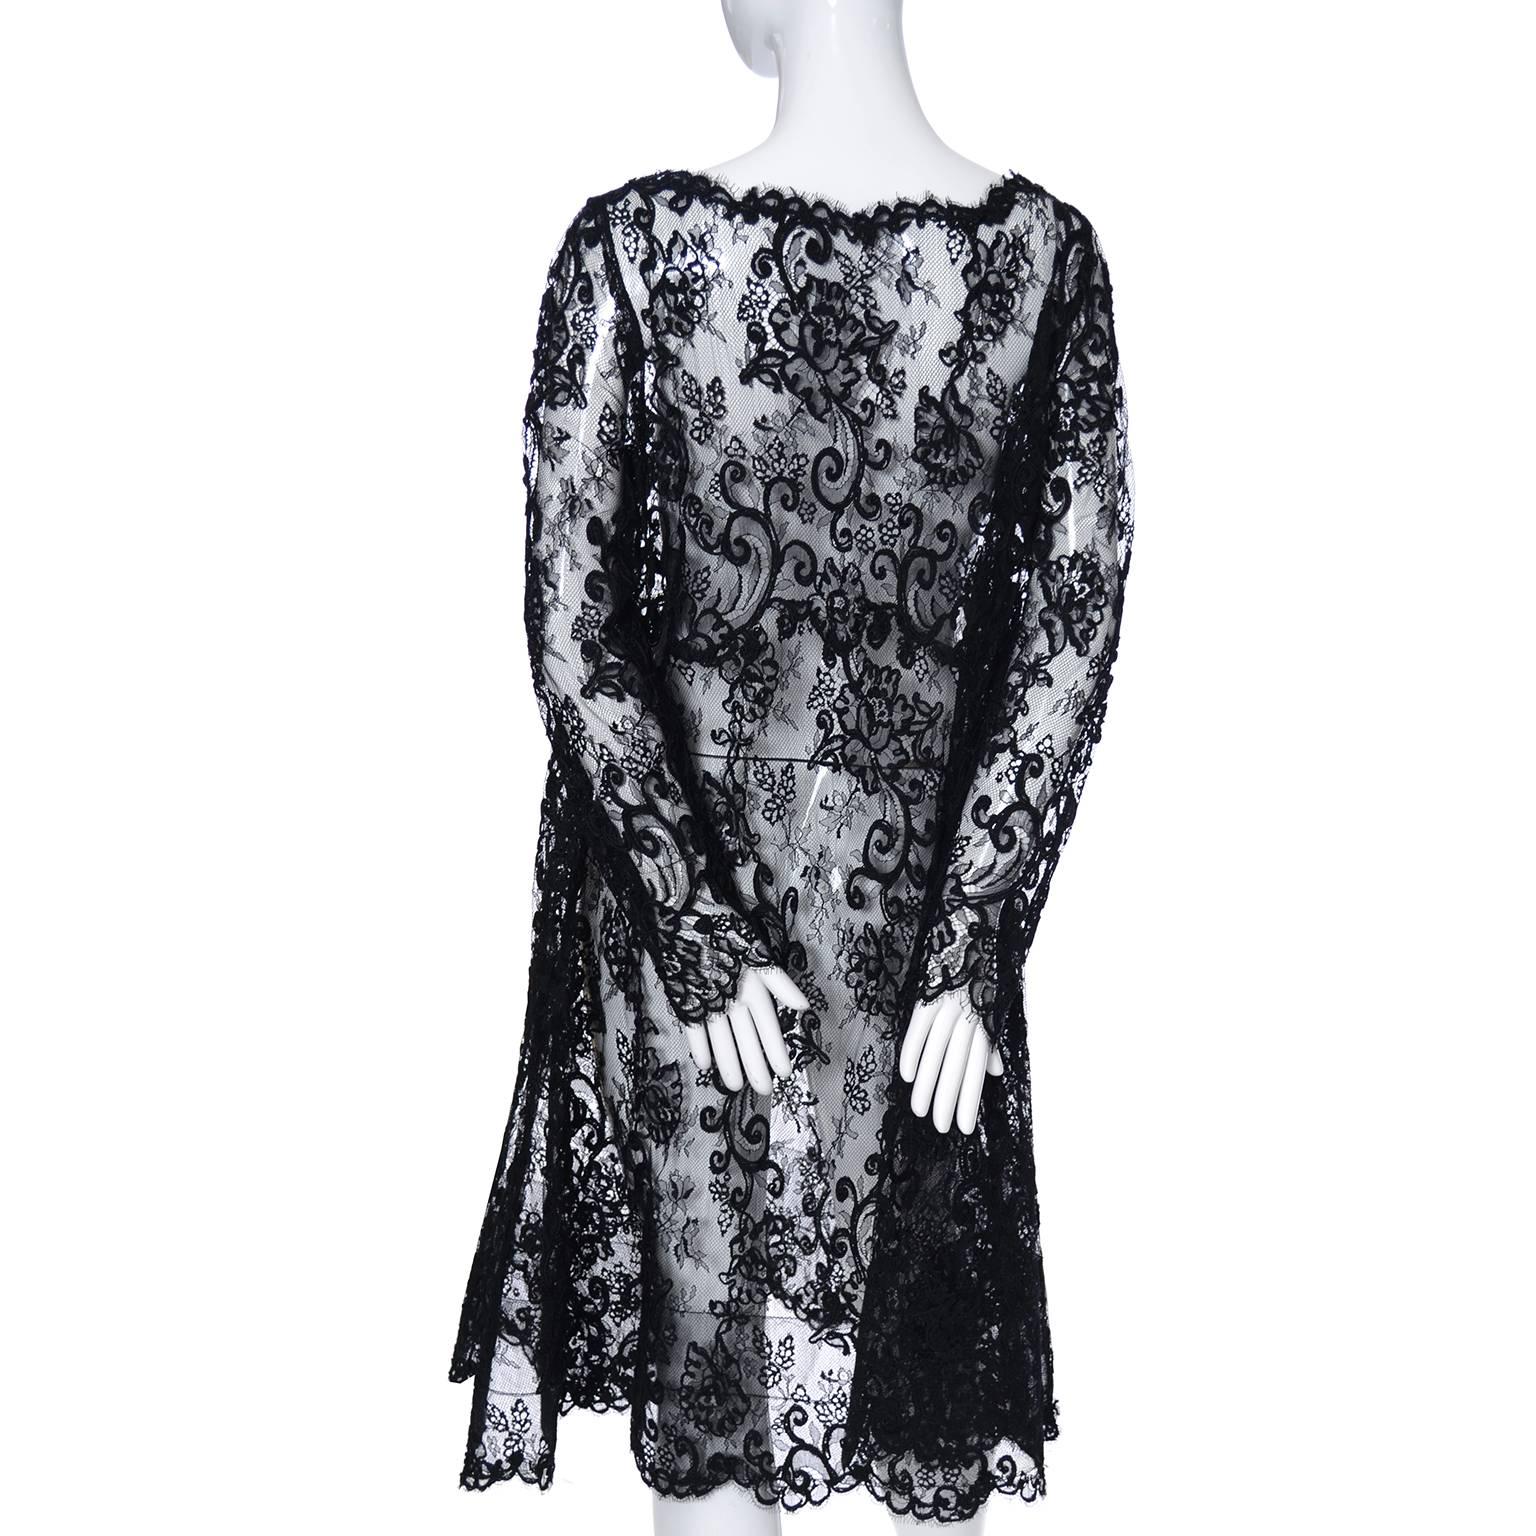 All Lace Oscar de la Renta Dress Black Evening Vintage Trapeze Dress 1